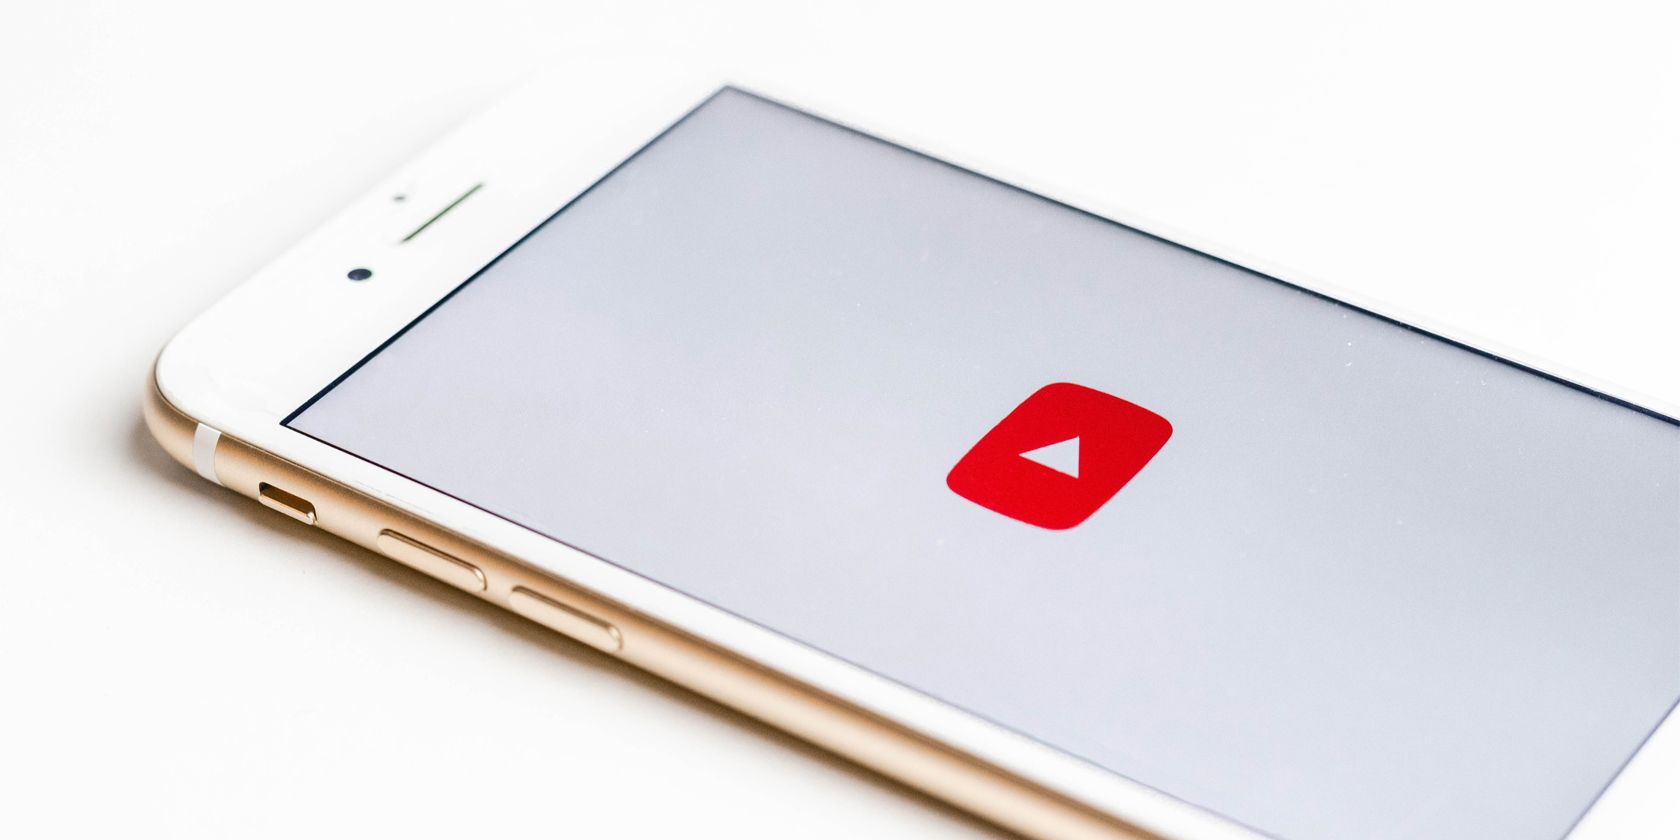 iPhone on white surface, showing YouTube logo